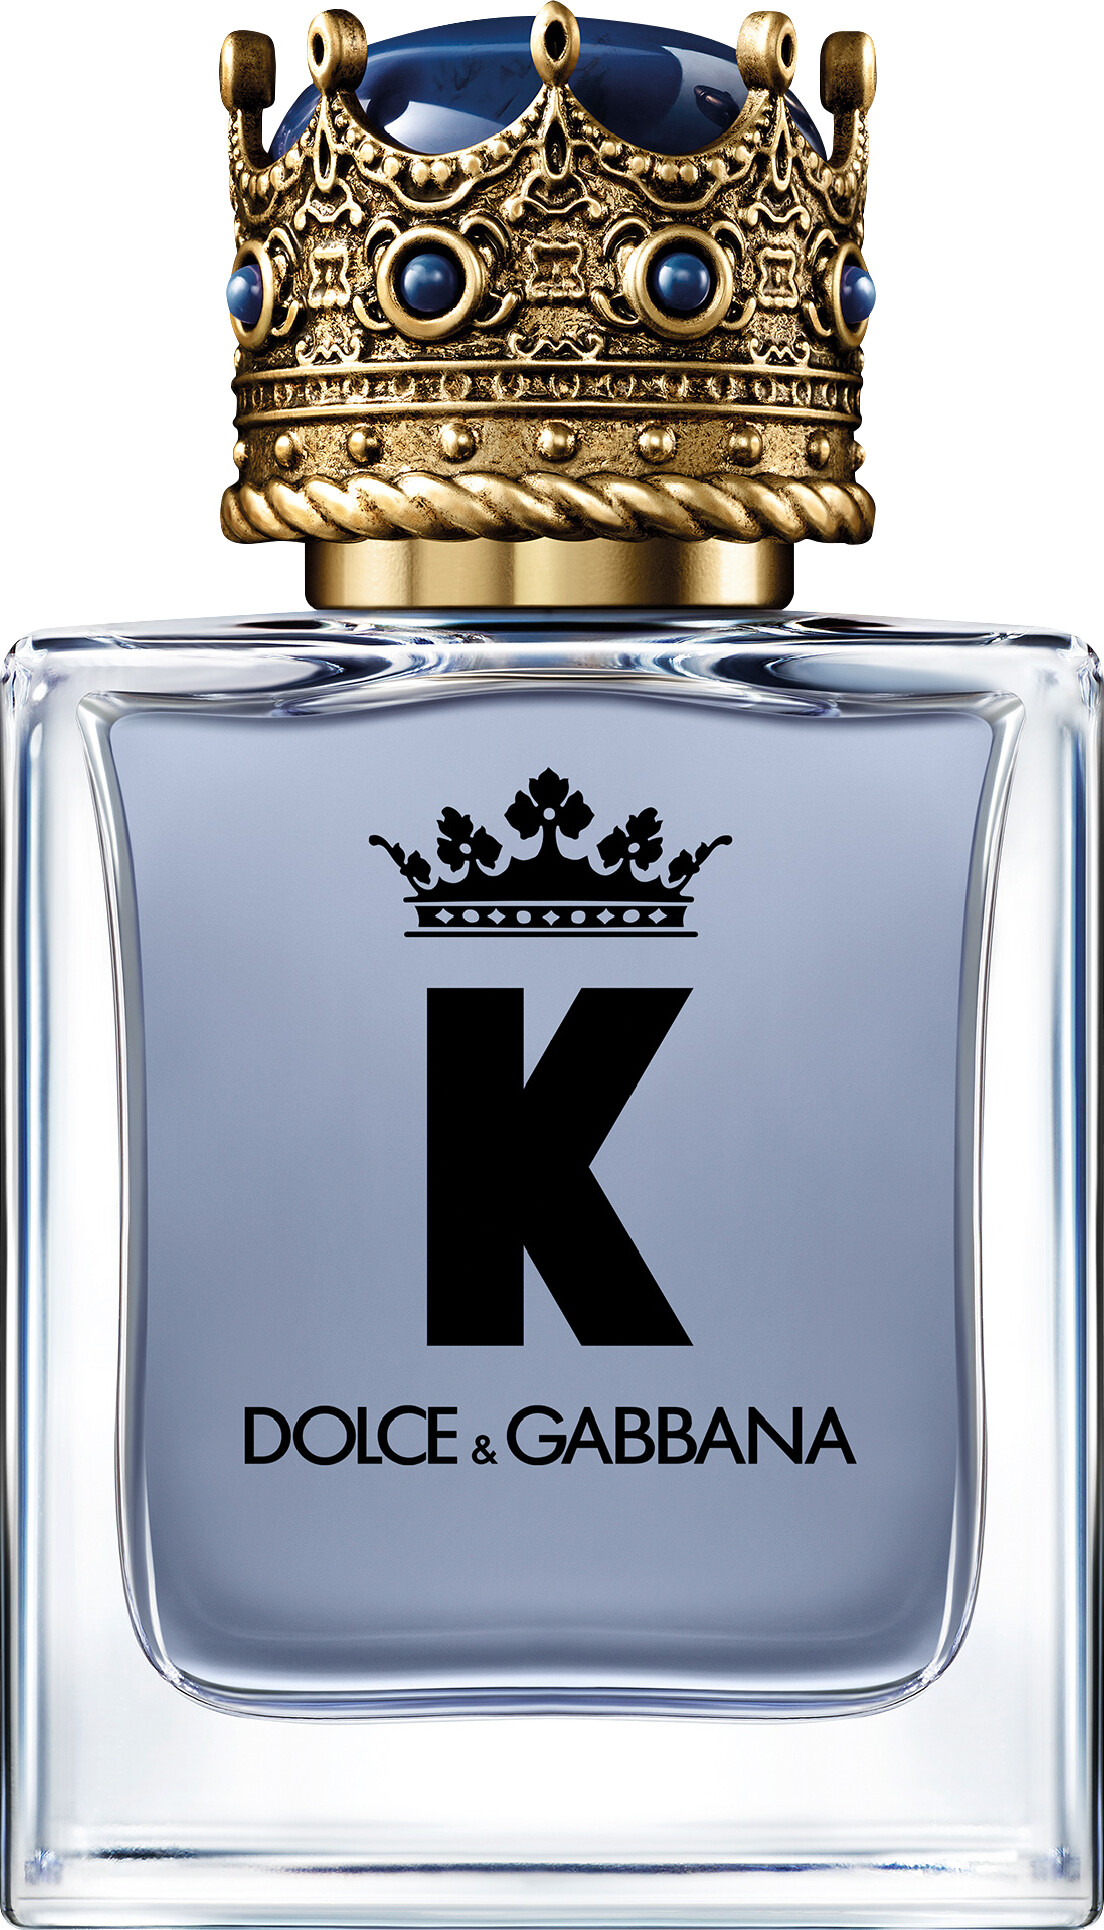 Dolce & Gabbana K By Dolce&Gabbana Eau de Toilette Spray 50ml